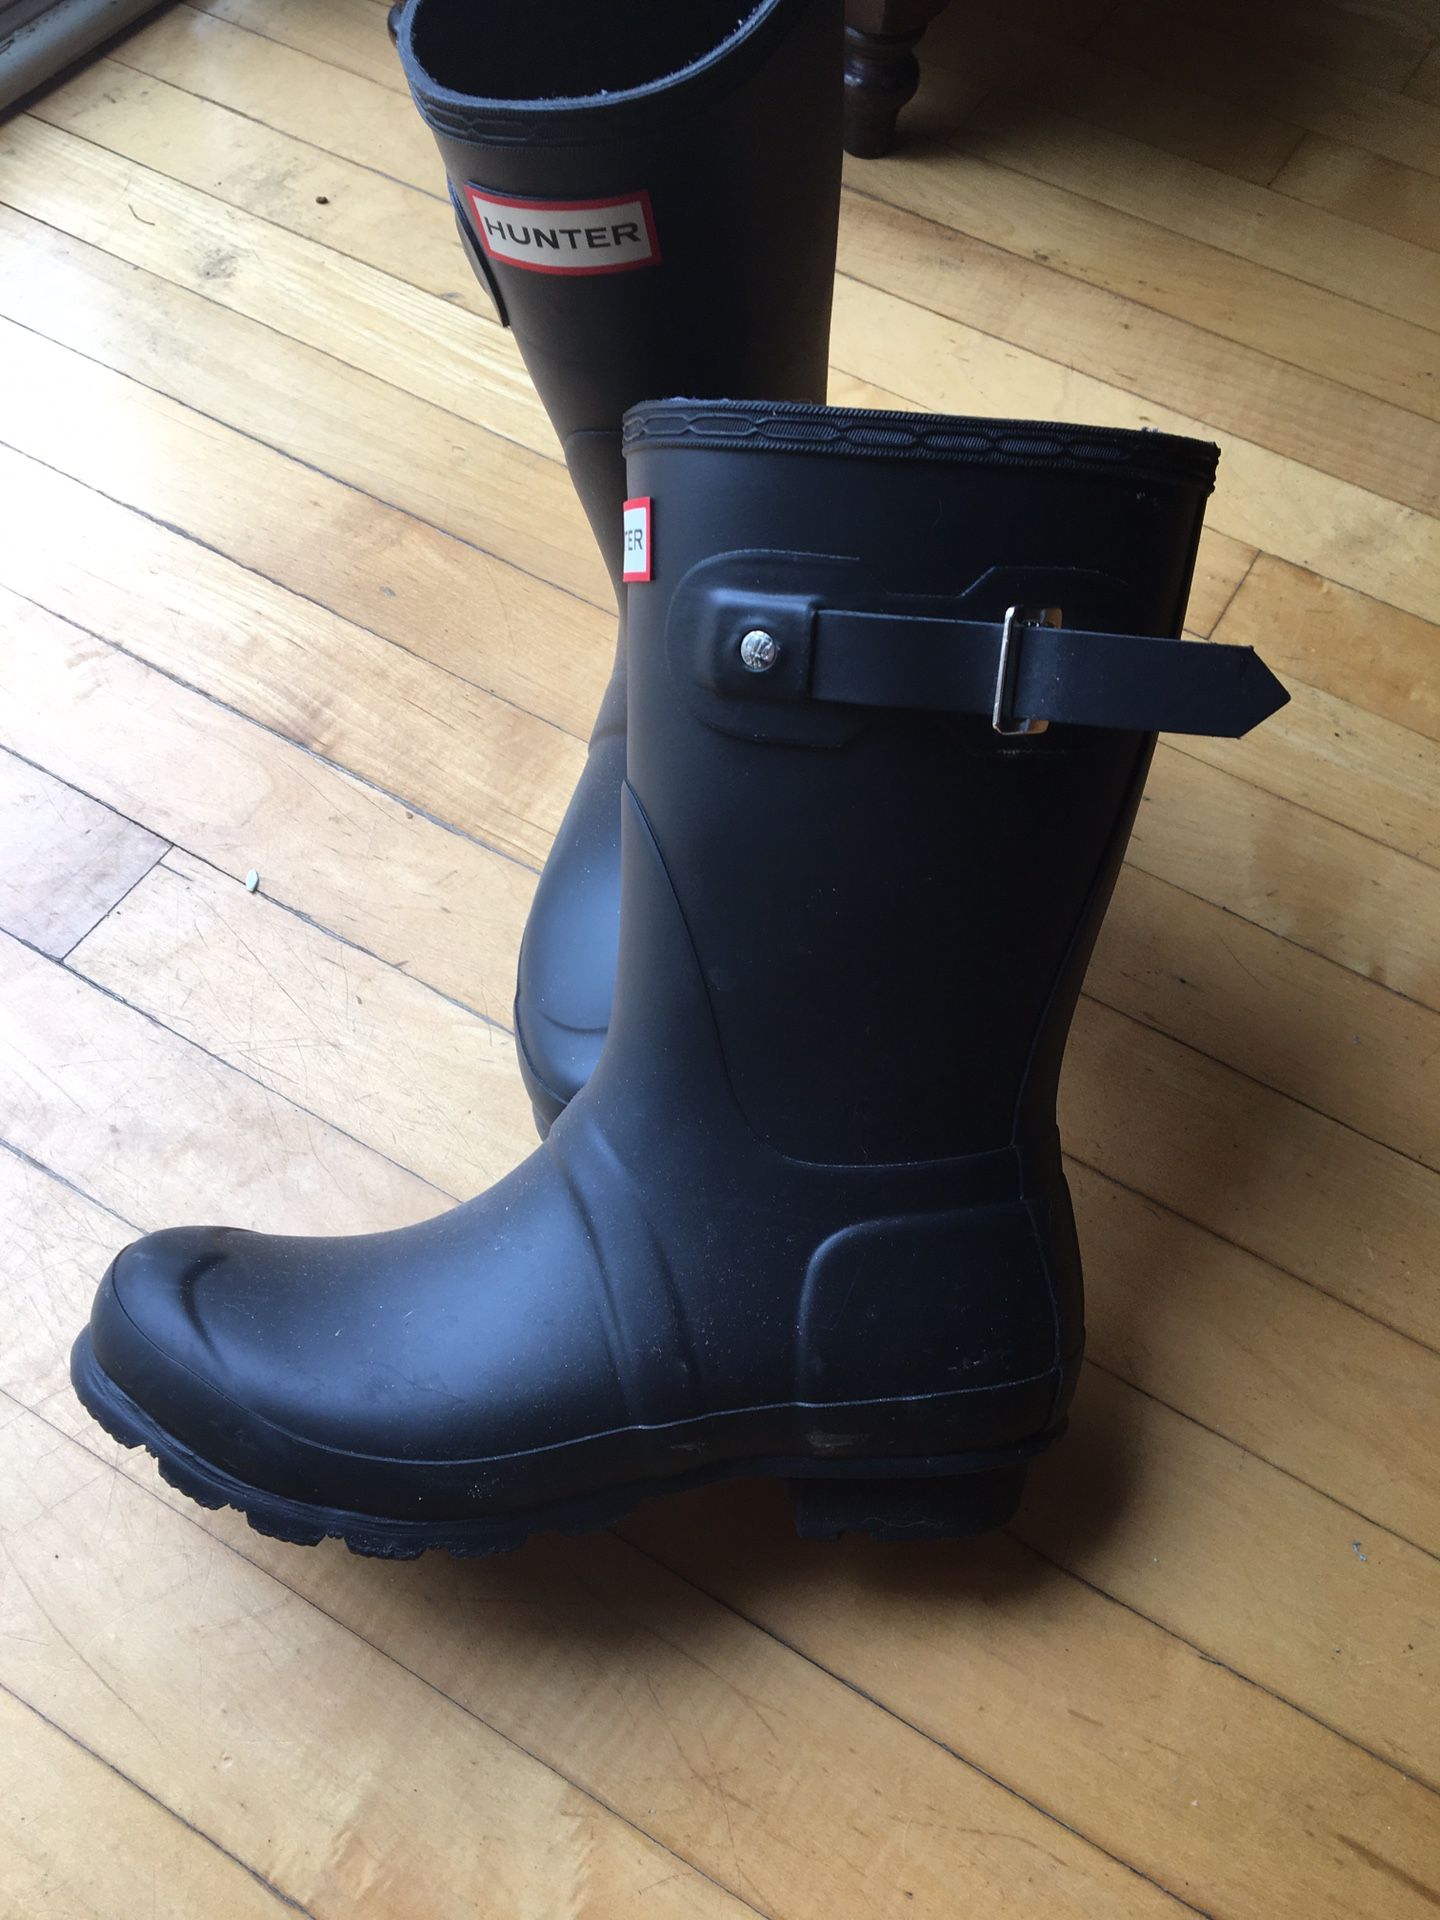 Hunter rain boots. Ladies size 7